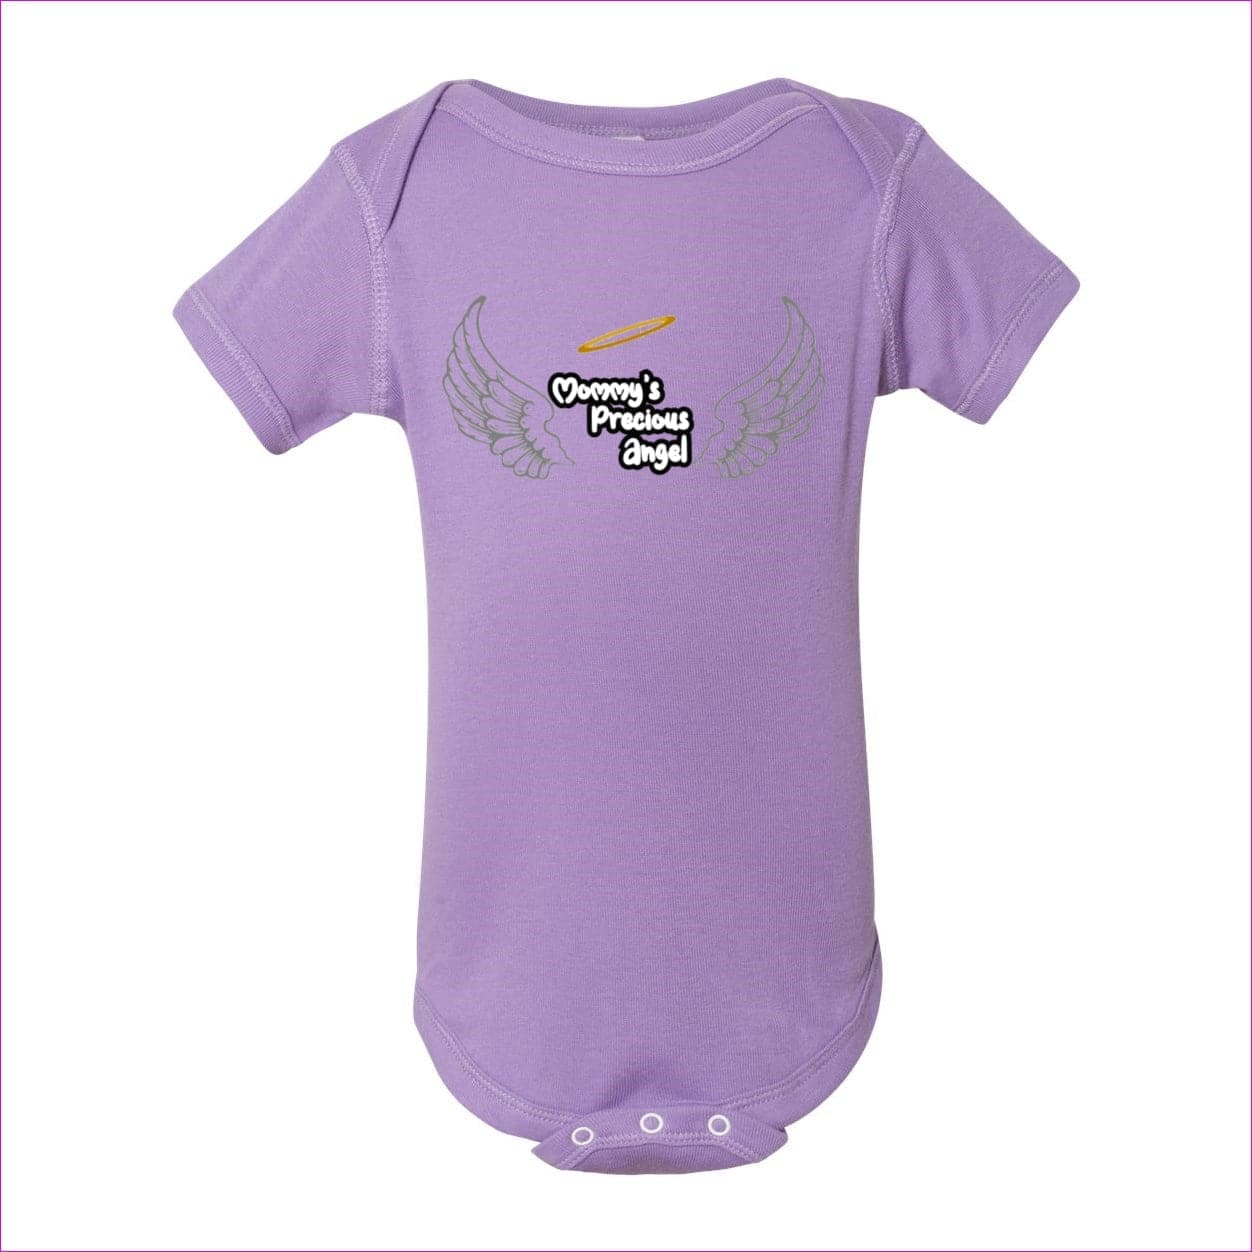 Lavender - Mommy's Precious Angel Infant Bodysuit - infant onesie at TFC&H Co.